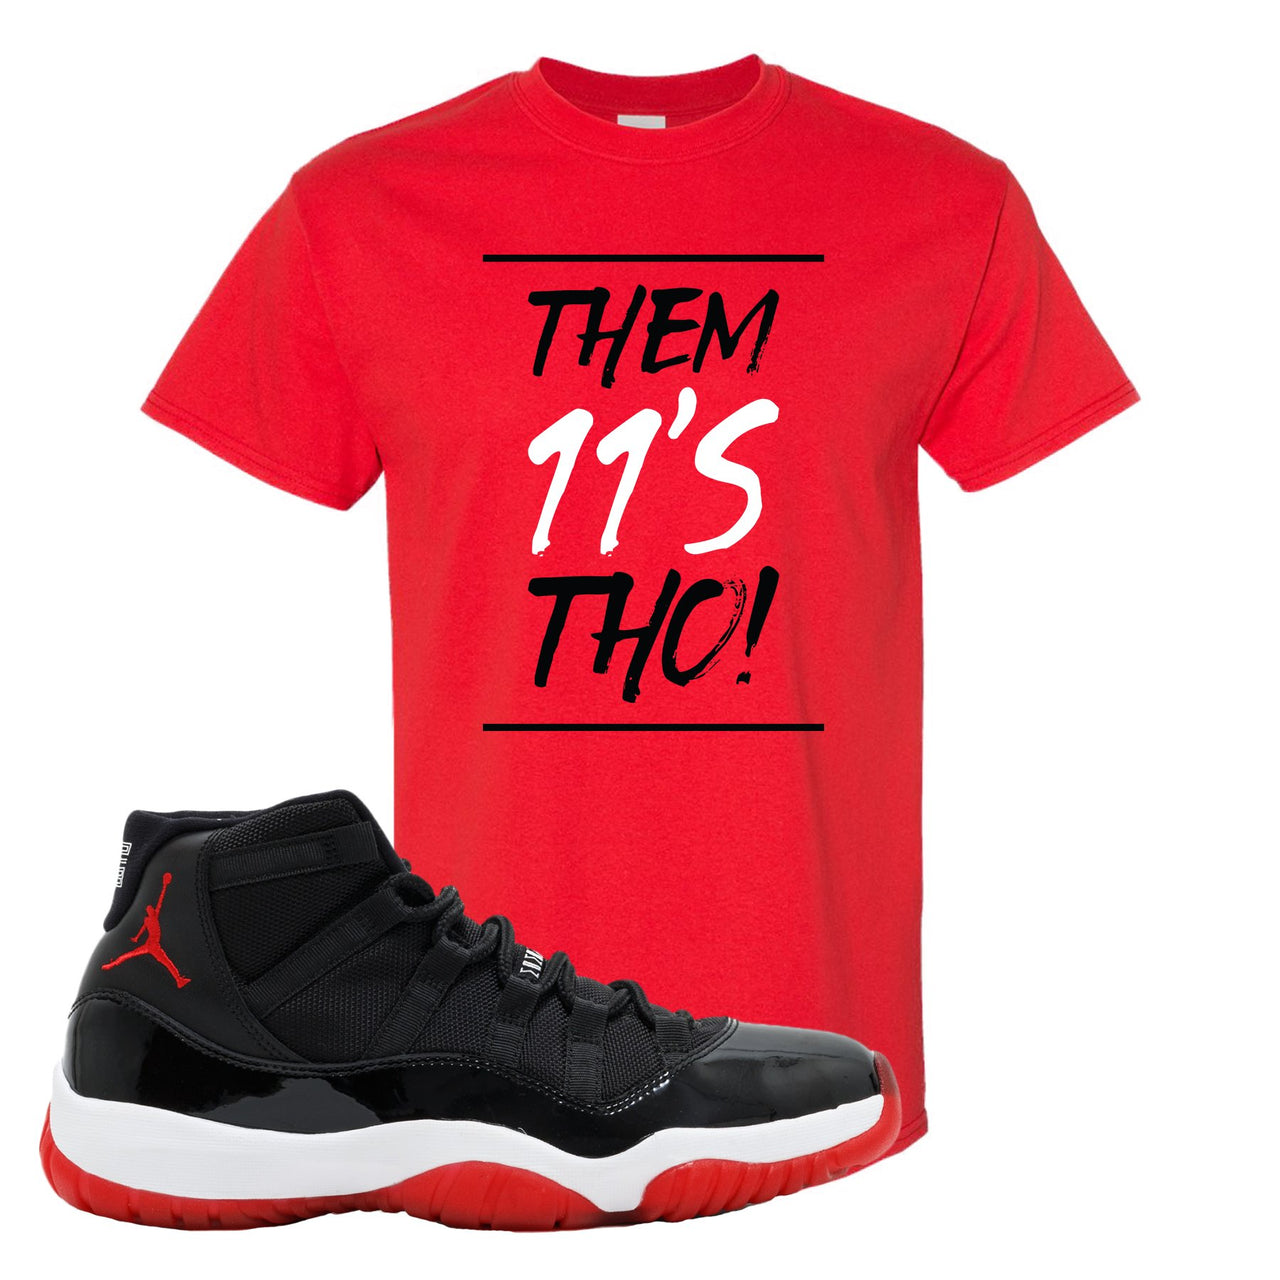 Jordan 11 Bred Them 11s Tho! Red Sneaker Hook Up T-Shirt